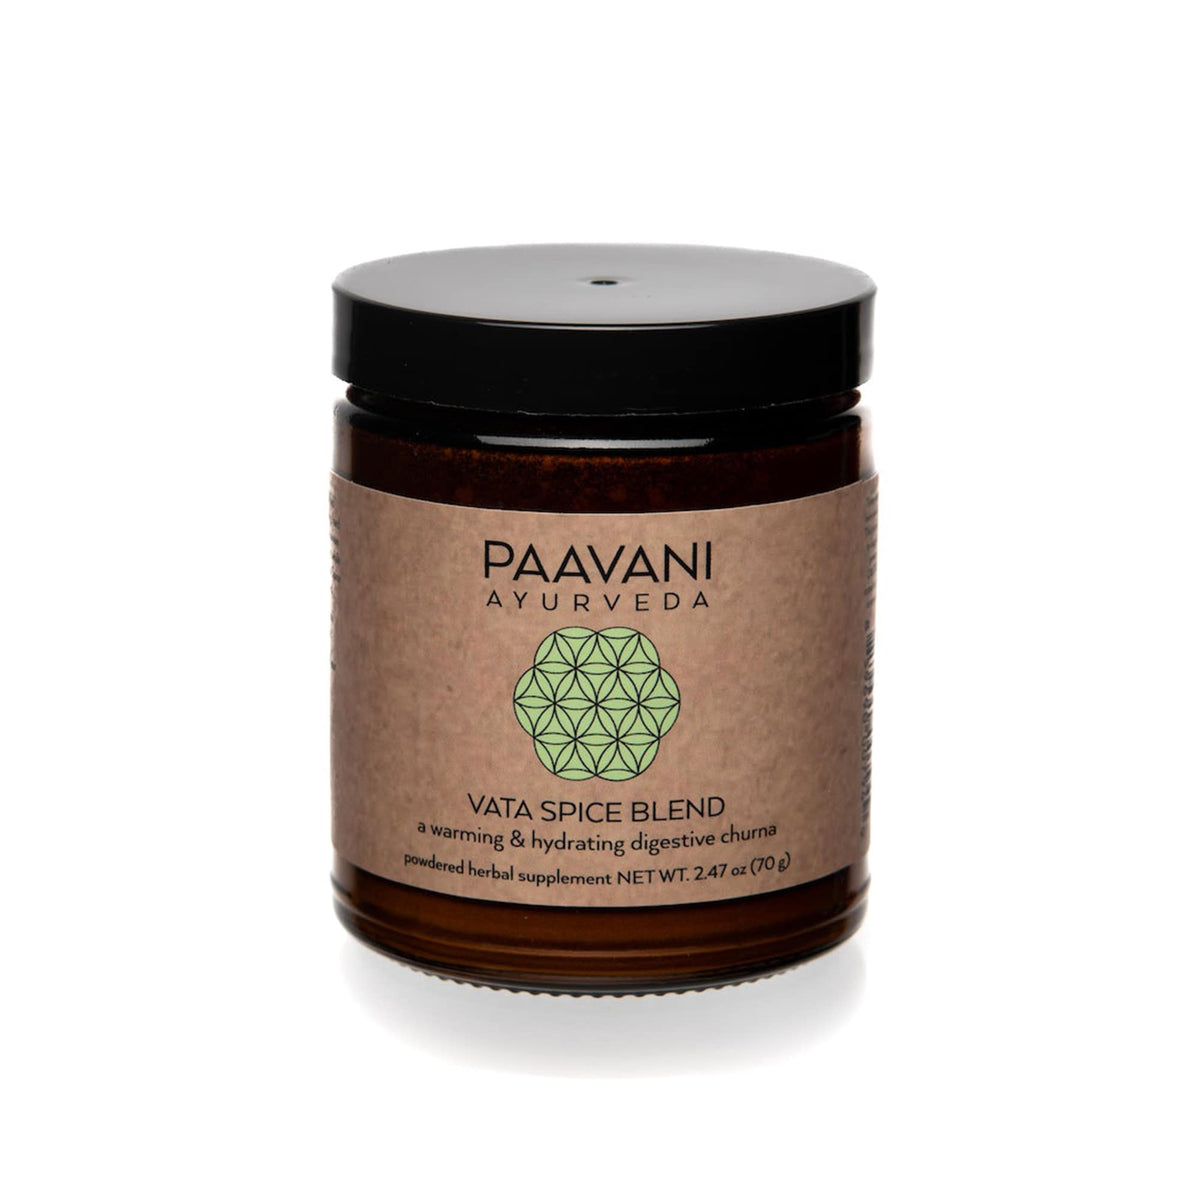 Paavani Ayurveda - Vata Spice Blend with Organic Ginger, Cumin and Cinnamon, Warming Hydrating Digestive Churna 9 oz.